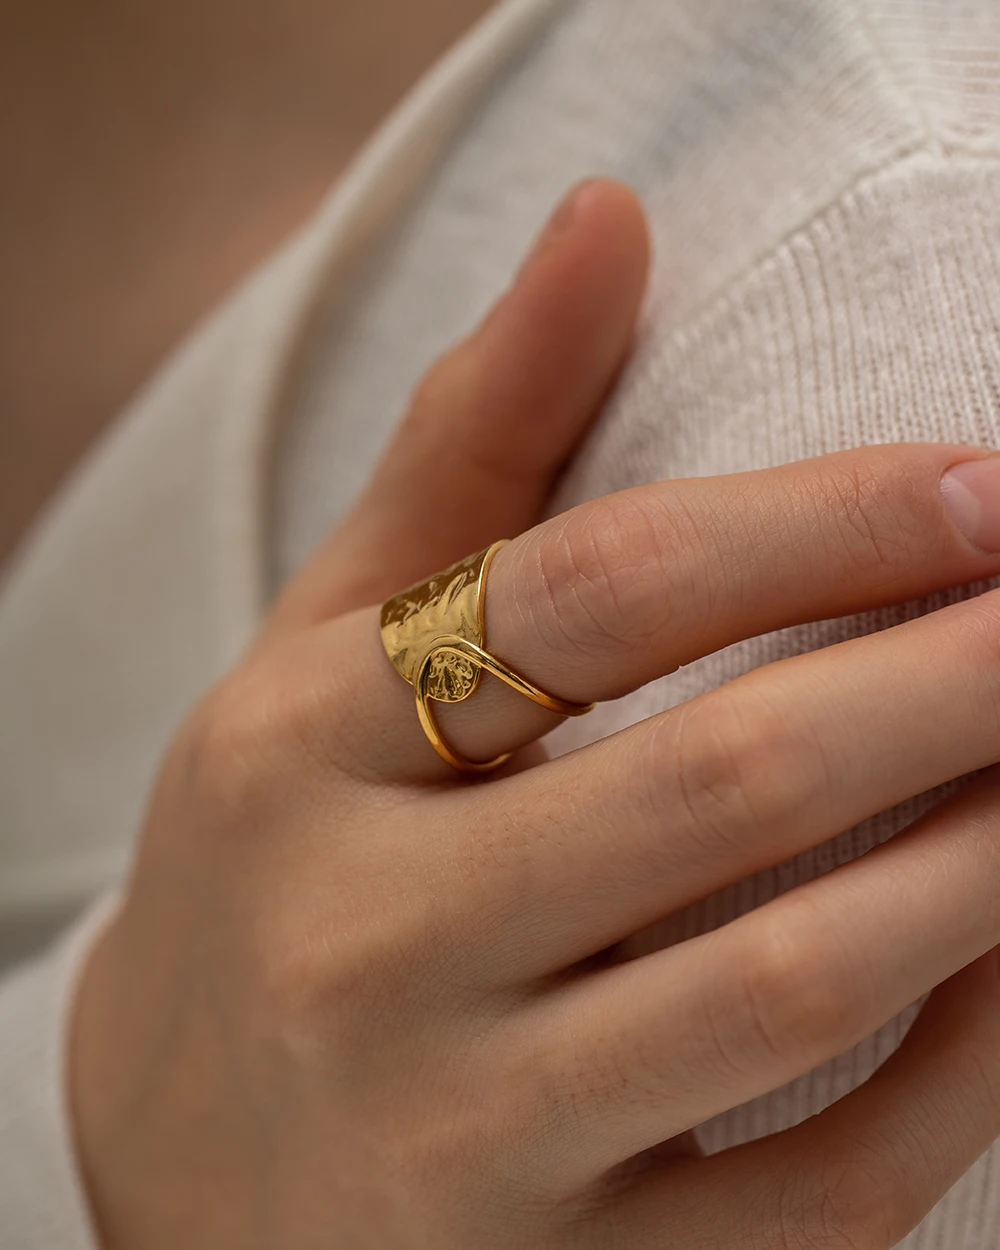 Youthway Minimalist Geometric Stainless Steel Finger Ring Waterproof Jewelry кольца для женщин Gift 5